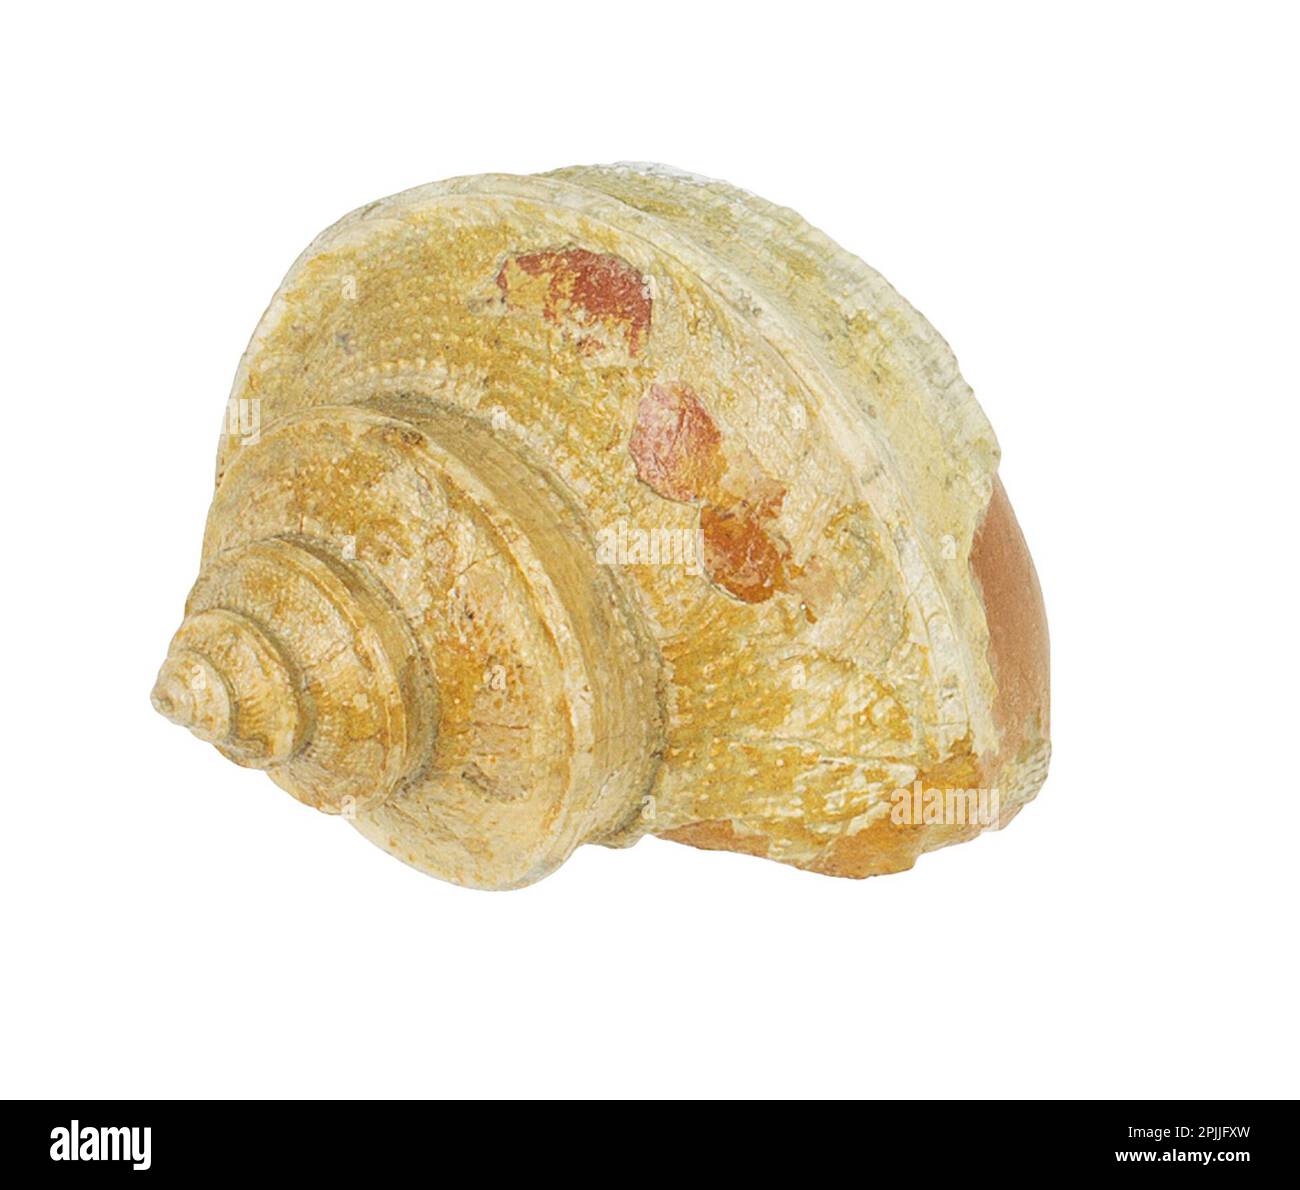 Fossilized snail shell, Worthenia tabulata, fossil specimen isolated on white background Stock Photo